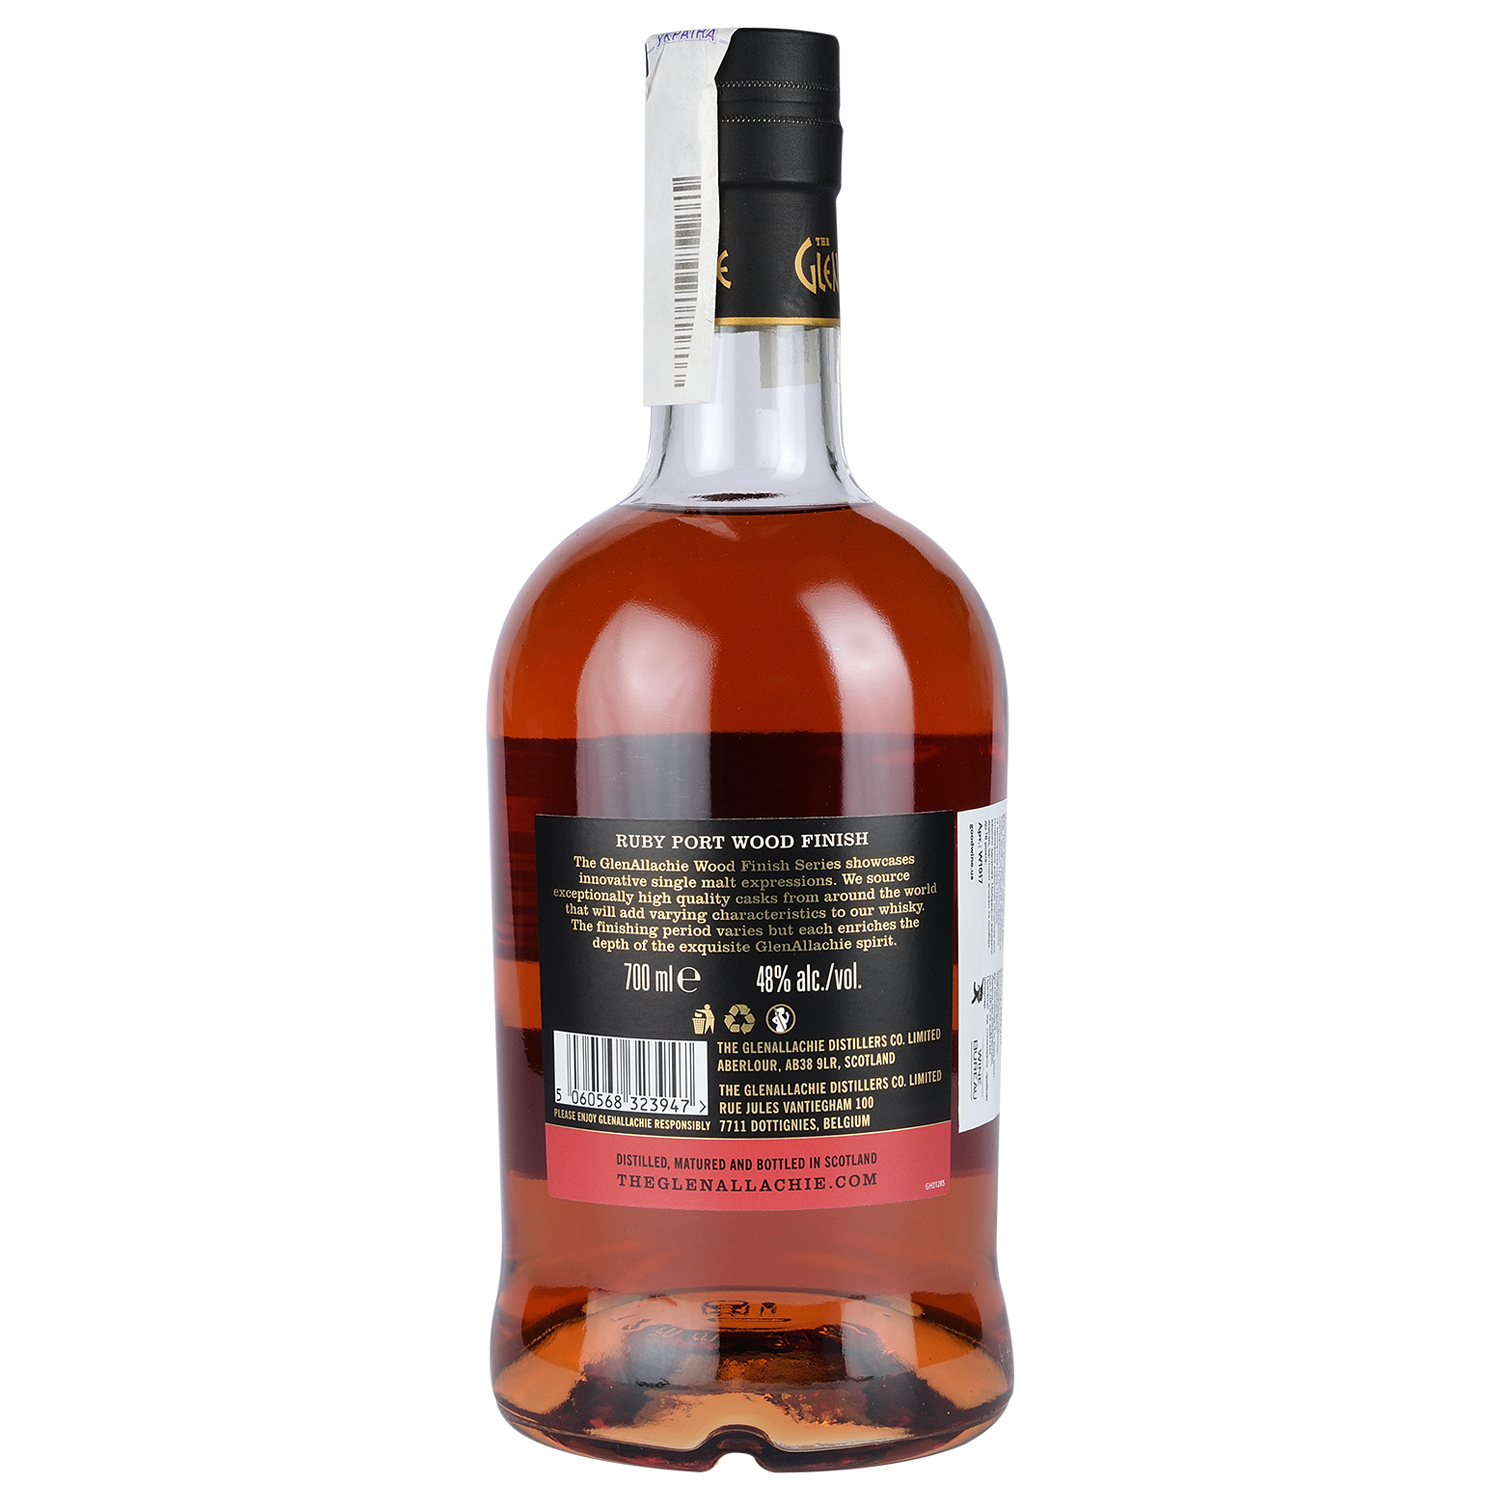 Виски GlenAllachie Single Malt Scotch Whisky Ruby Port Wood Finish 12 yo, в подарочной упаковке, 48%, 0,7 л - фото 2